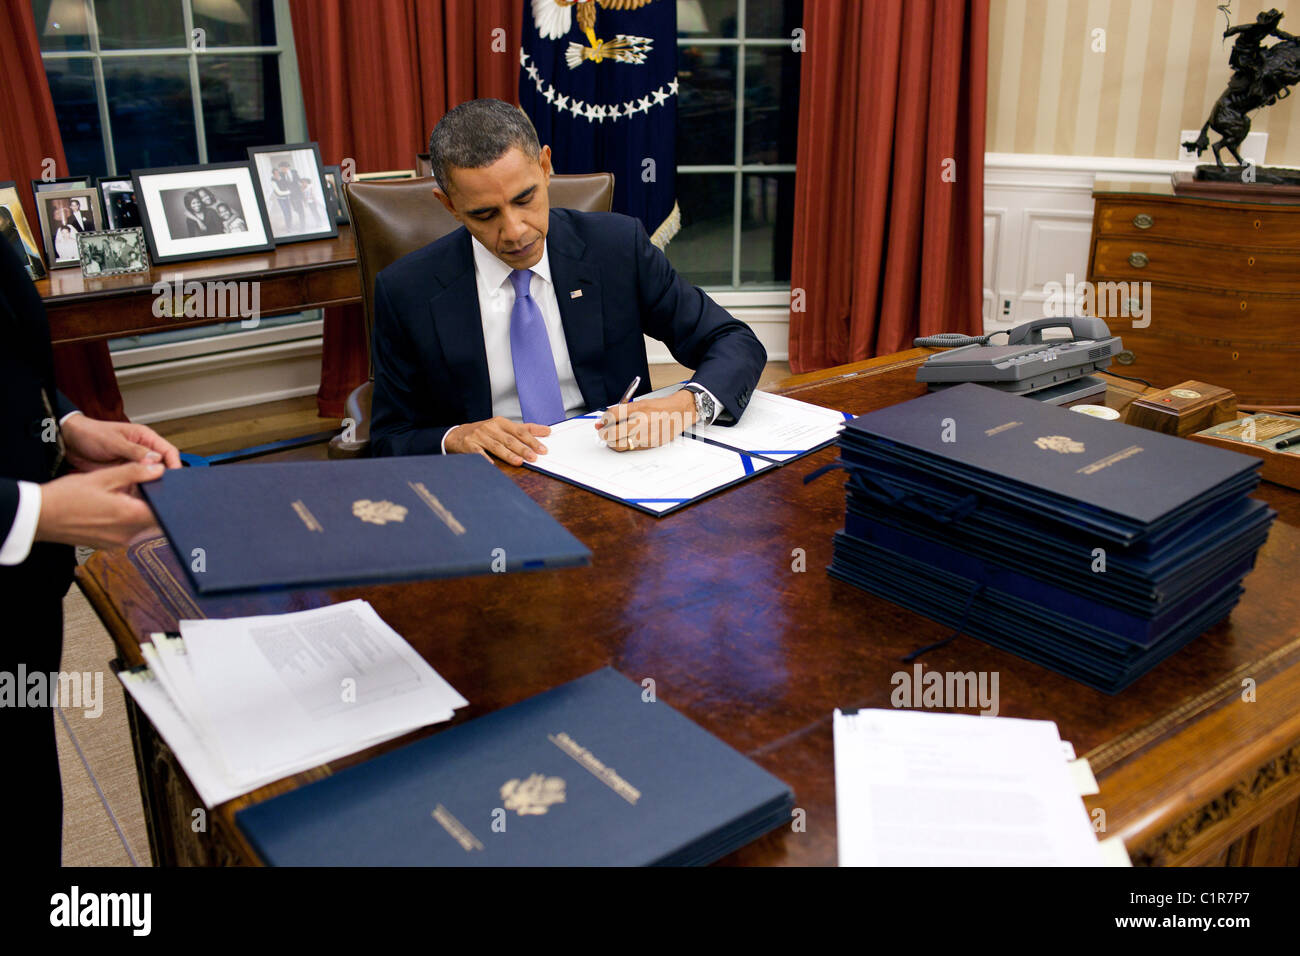 President Barack Obama signs legislation in the Oval Office, Dec. 22, 2010. Stock Photo